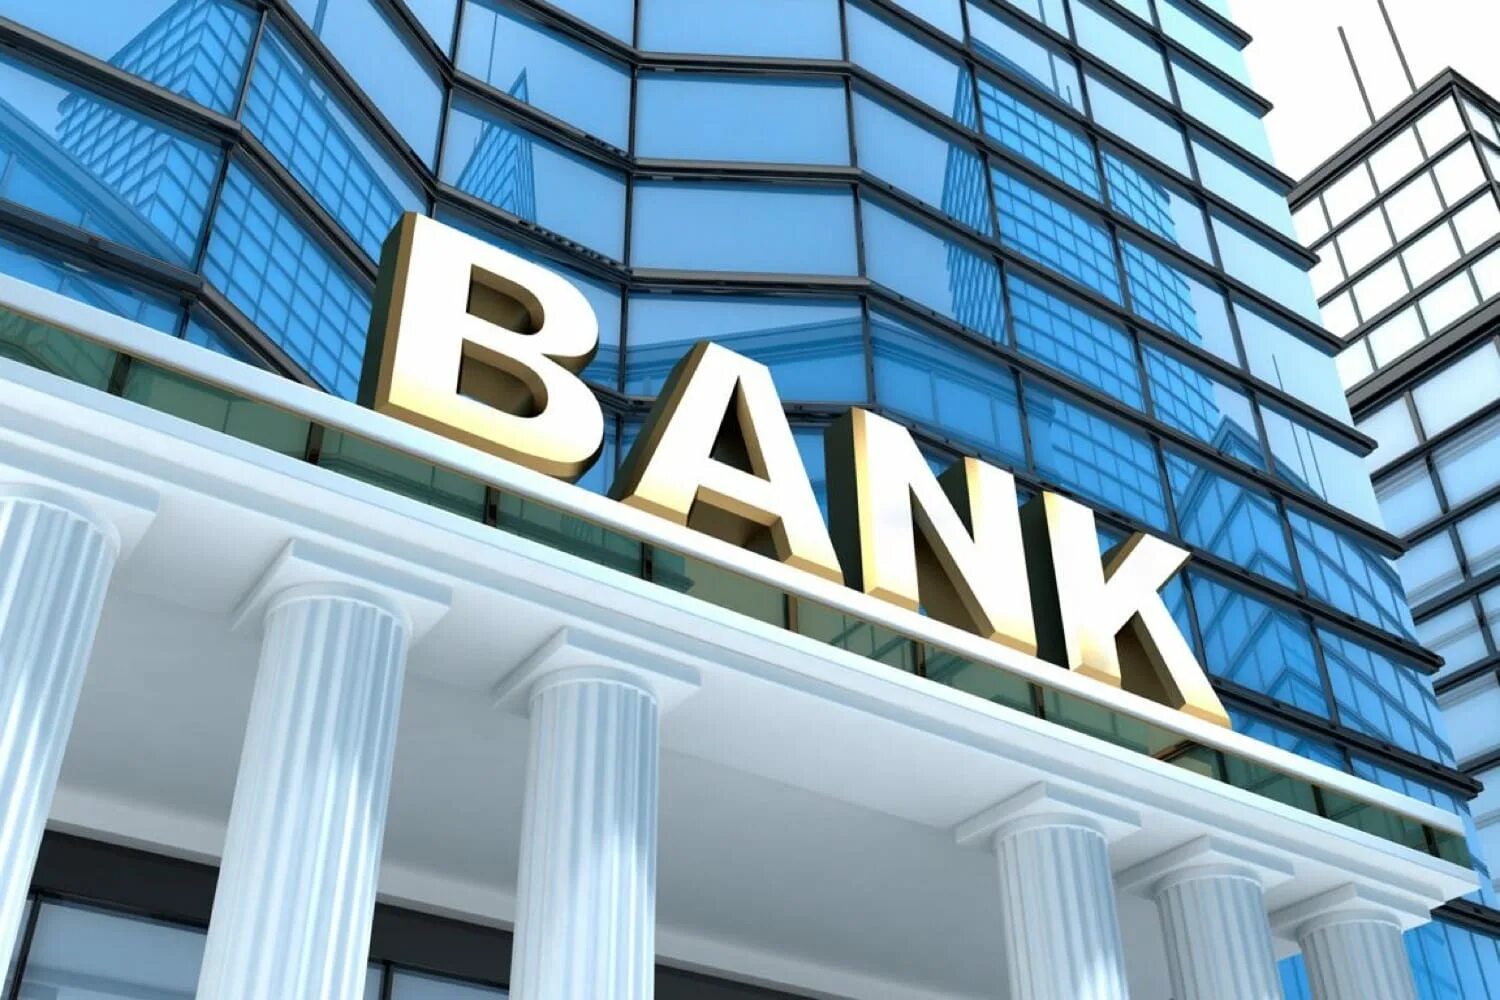 Bank pp. Банк. Банк картинка. Банки здания. Банк здание.